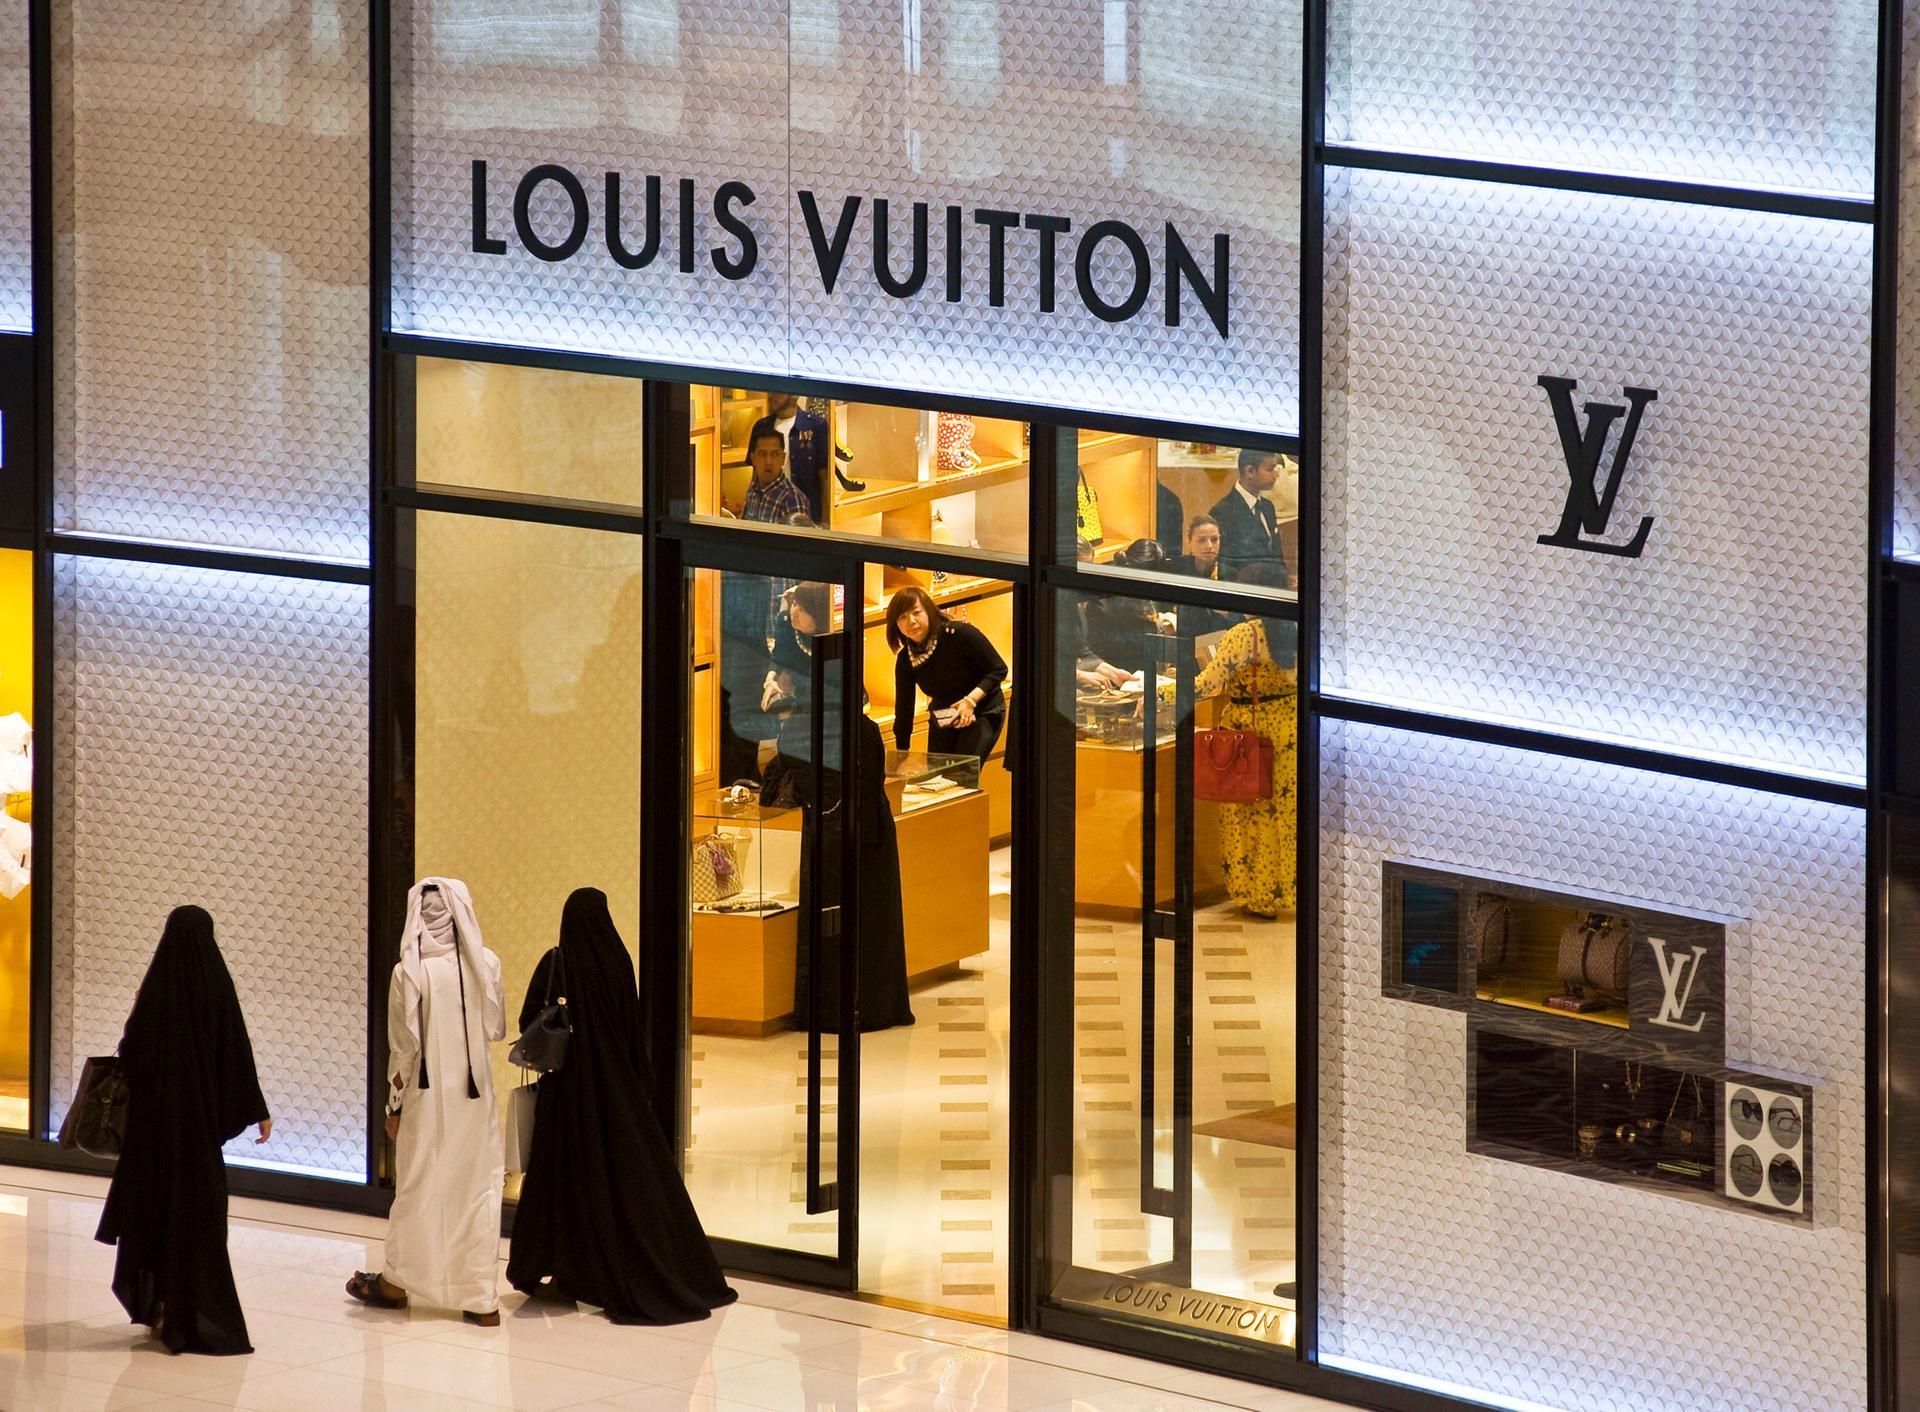 Louis Vuitton / Luxury / Materialism